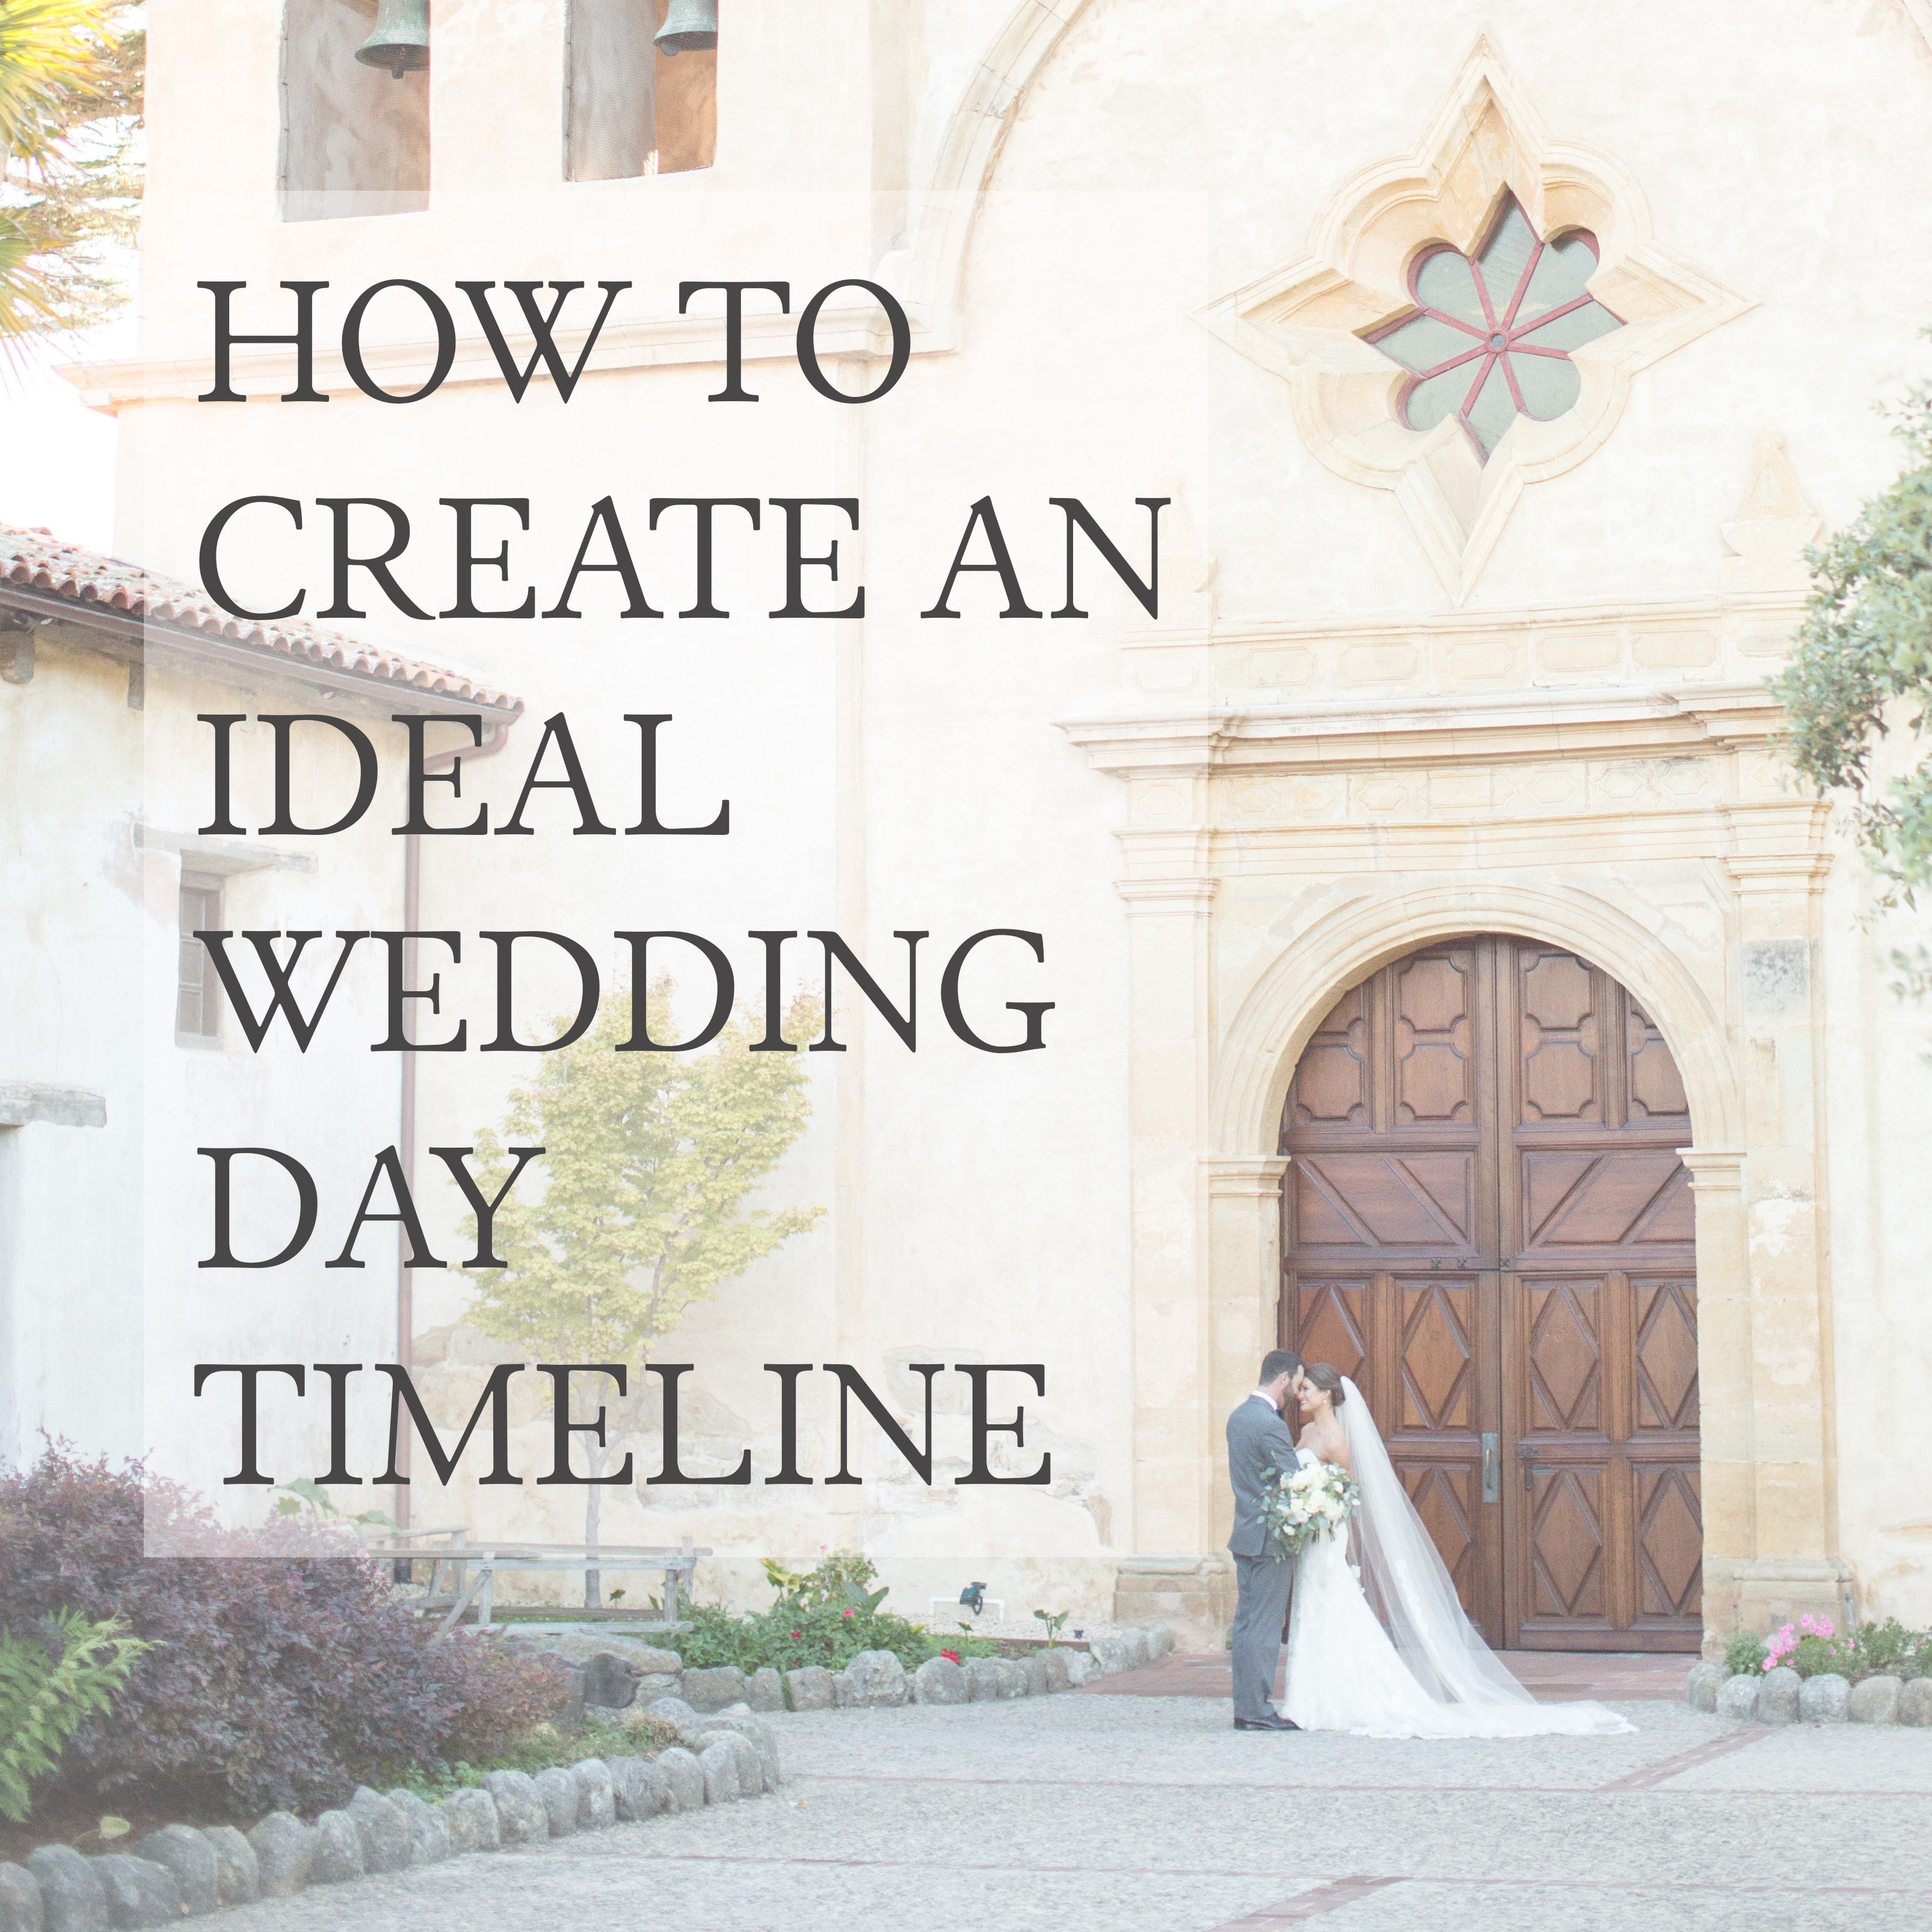 How To Create Your Ideal Wedding Day Timeline | Wedding Day Stress Relief | Laura & Rachel Photography www.lauraandrachel.com